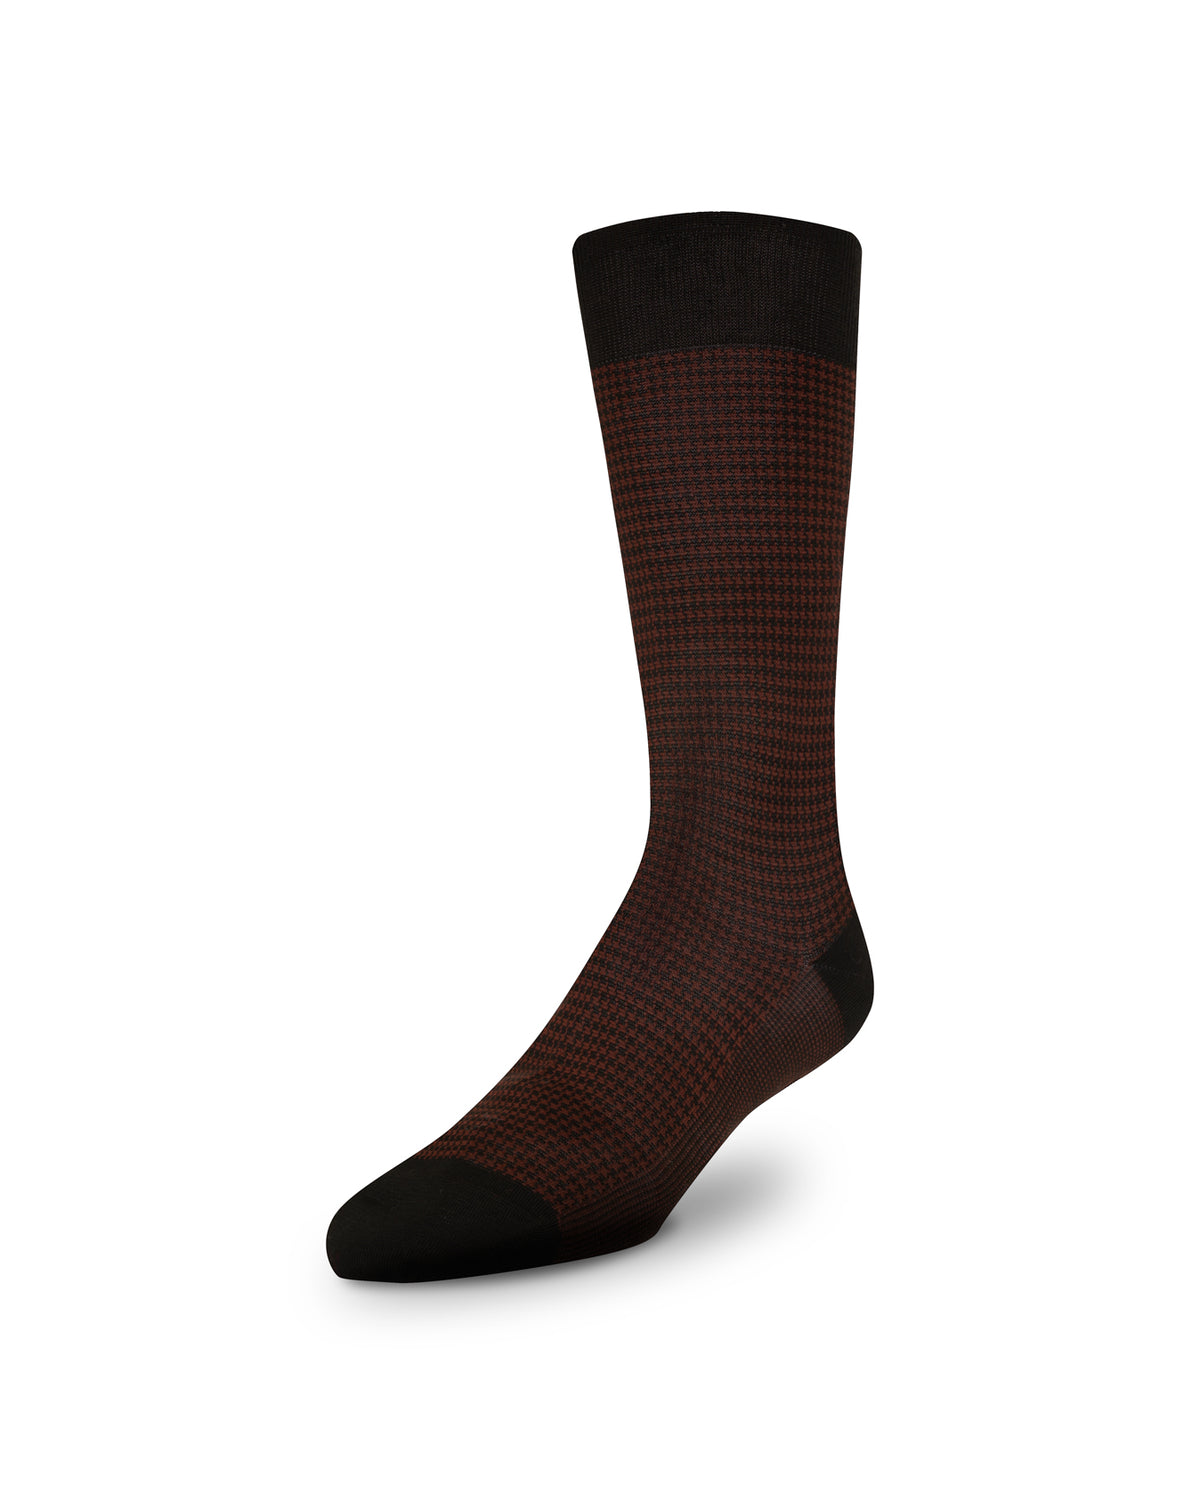 Houndstooth Calf Length Socks - Brown